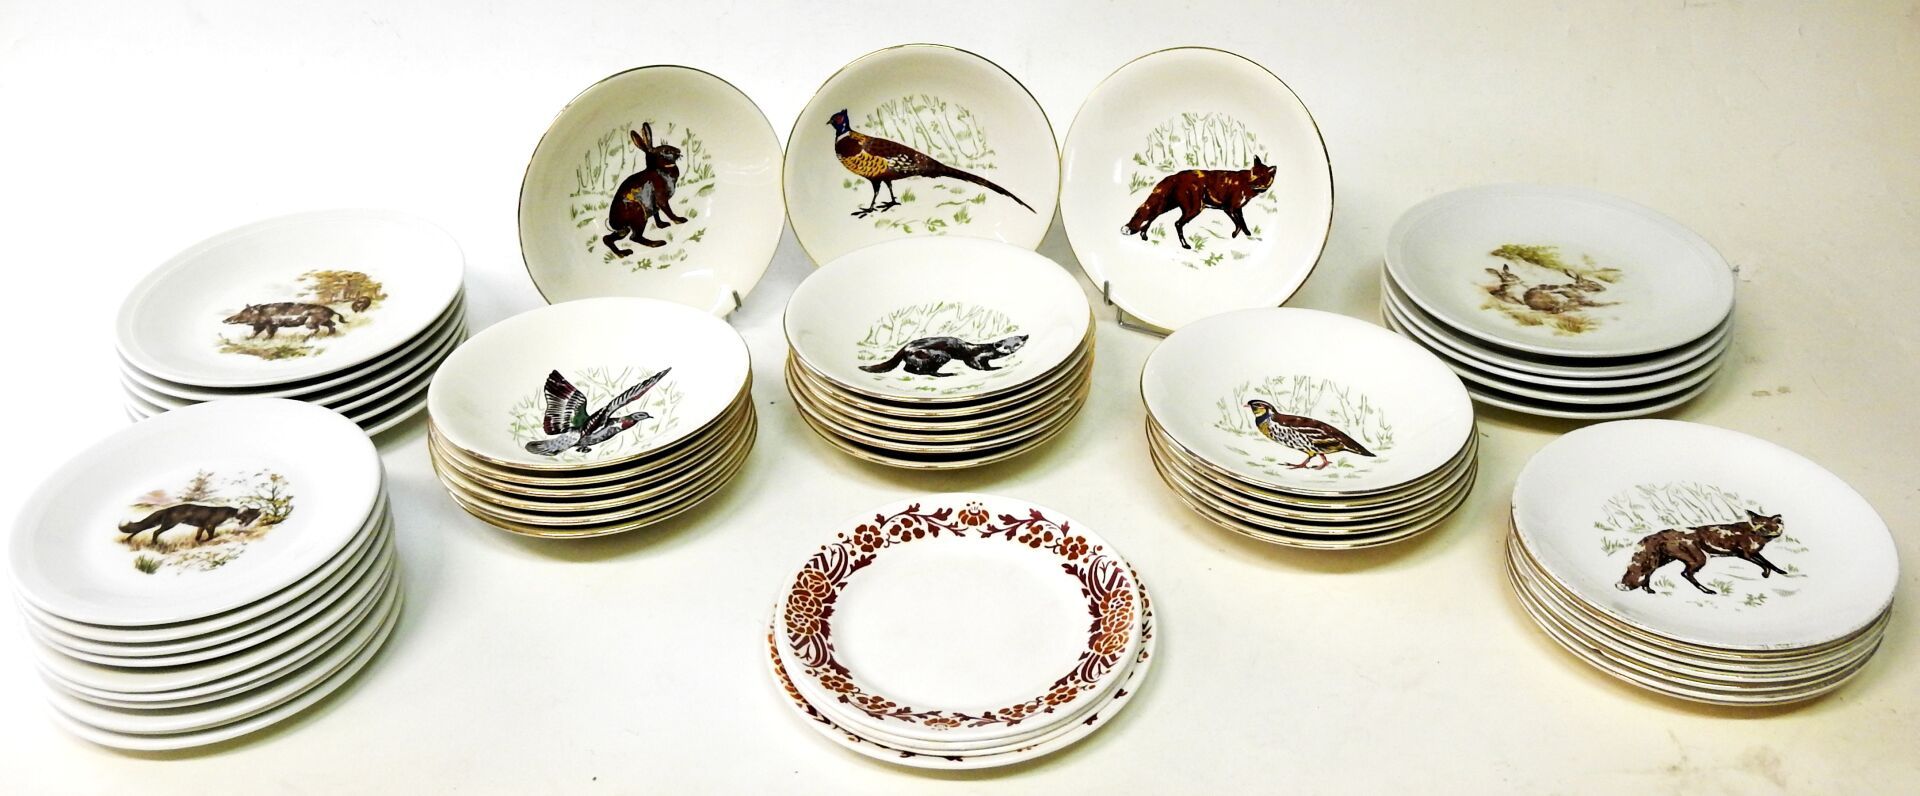 Null 吉恩和中央瓷器

Gien陶器和瓷器服务套装包括。

Gien "Marly "模型：二十个汤盘和七个带动物装饰的甜点盘。

中心瓷器：11个大盘子，&hellip;